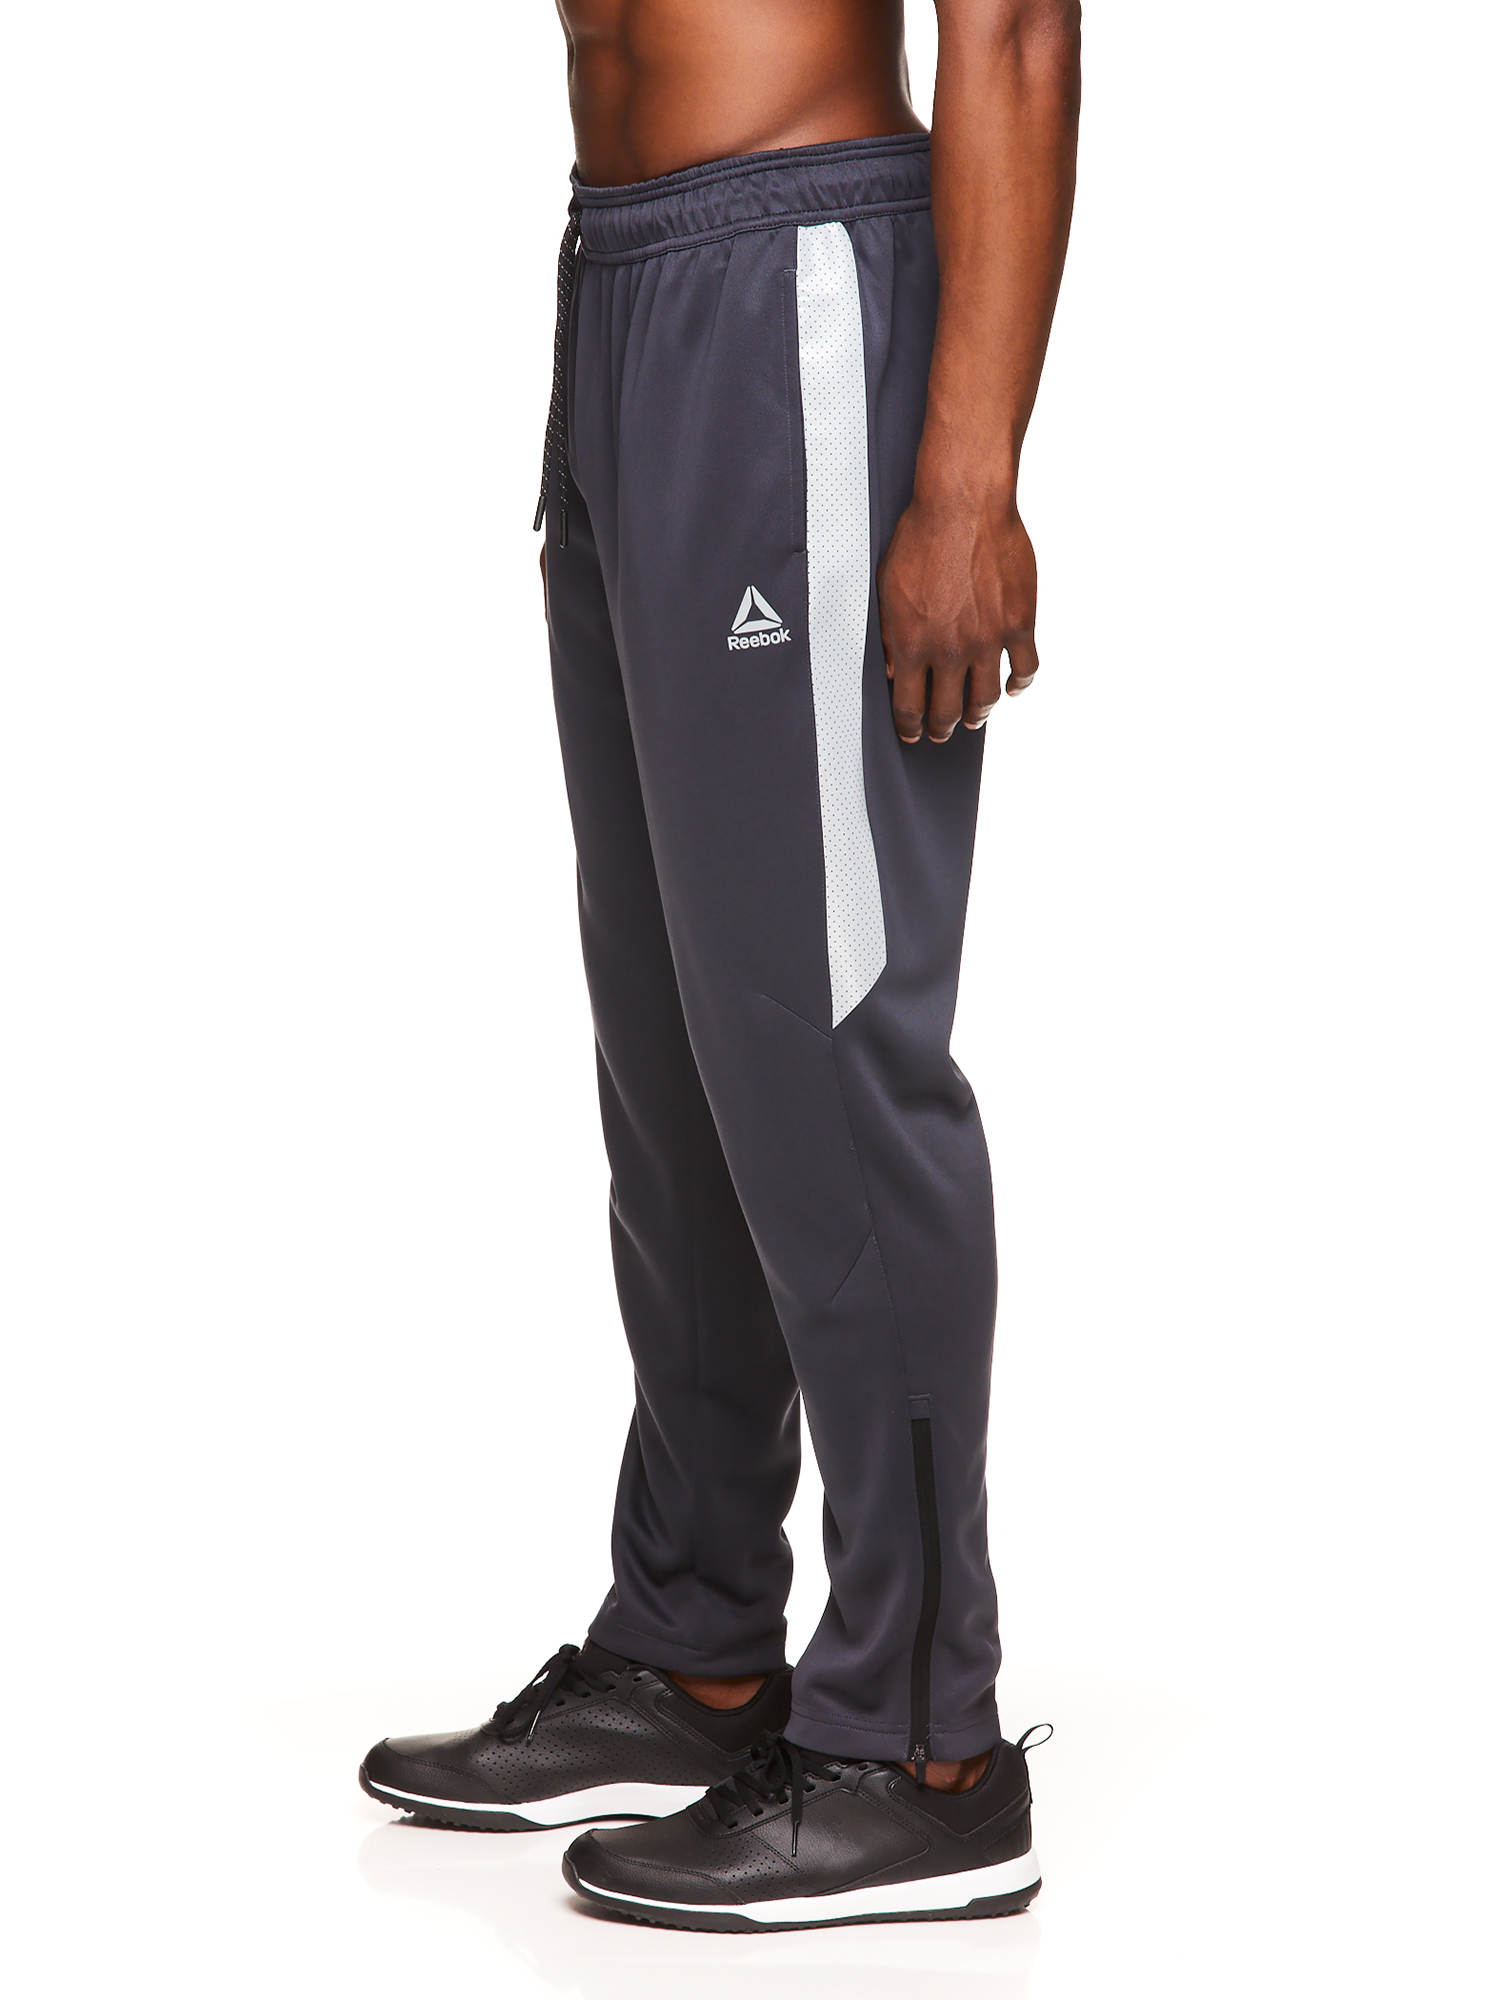 Reebok Men's and Big Men's Active Interlock Pants, up to Size 3XL - image 3 of 4